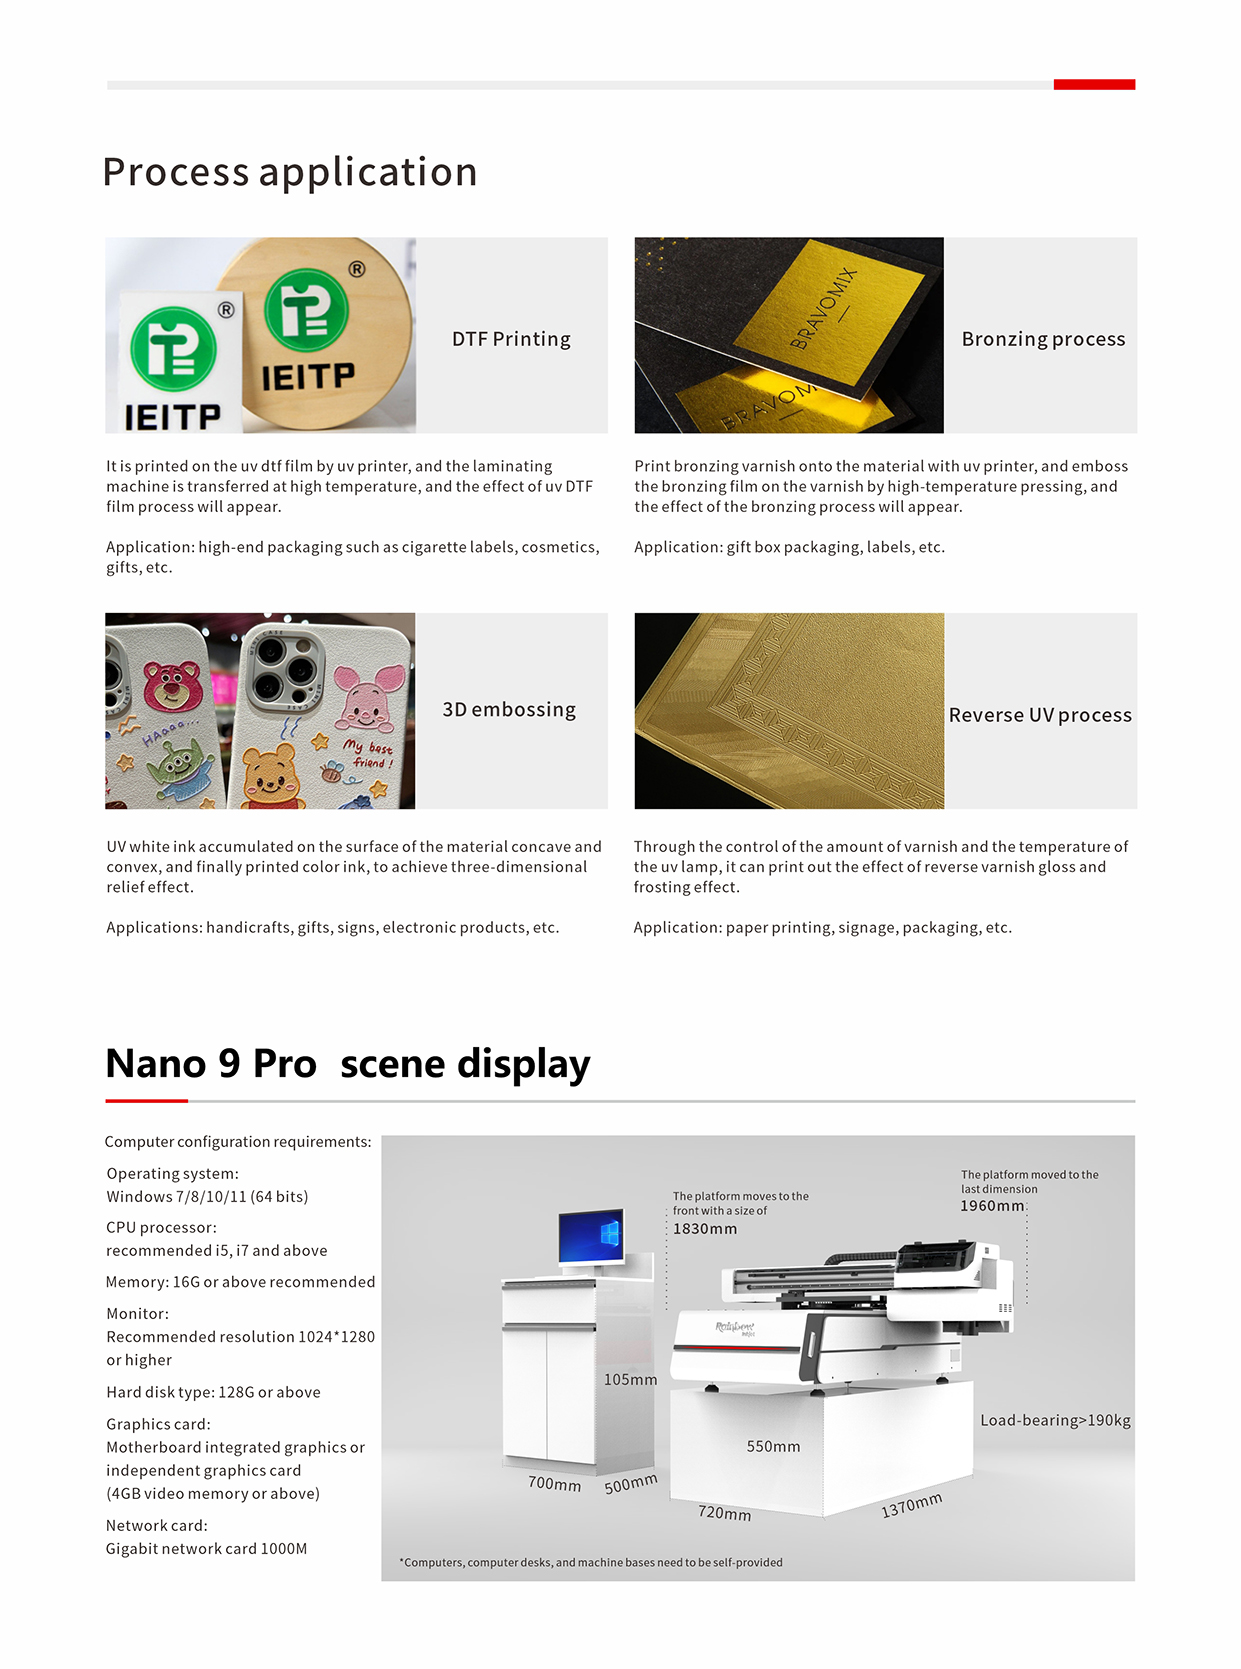 nano 9 pro uv flatbed printer with i1600 (3)